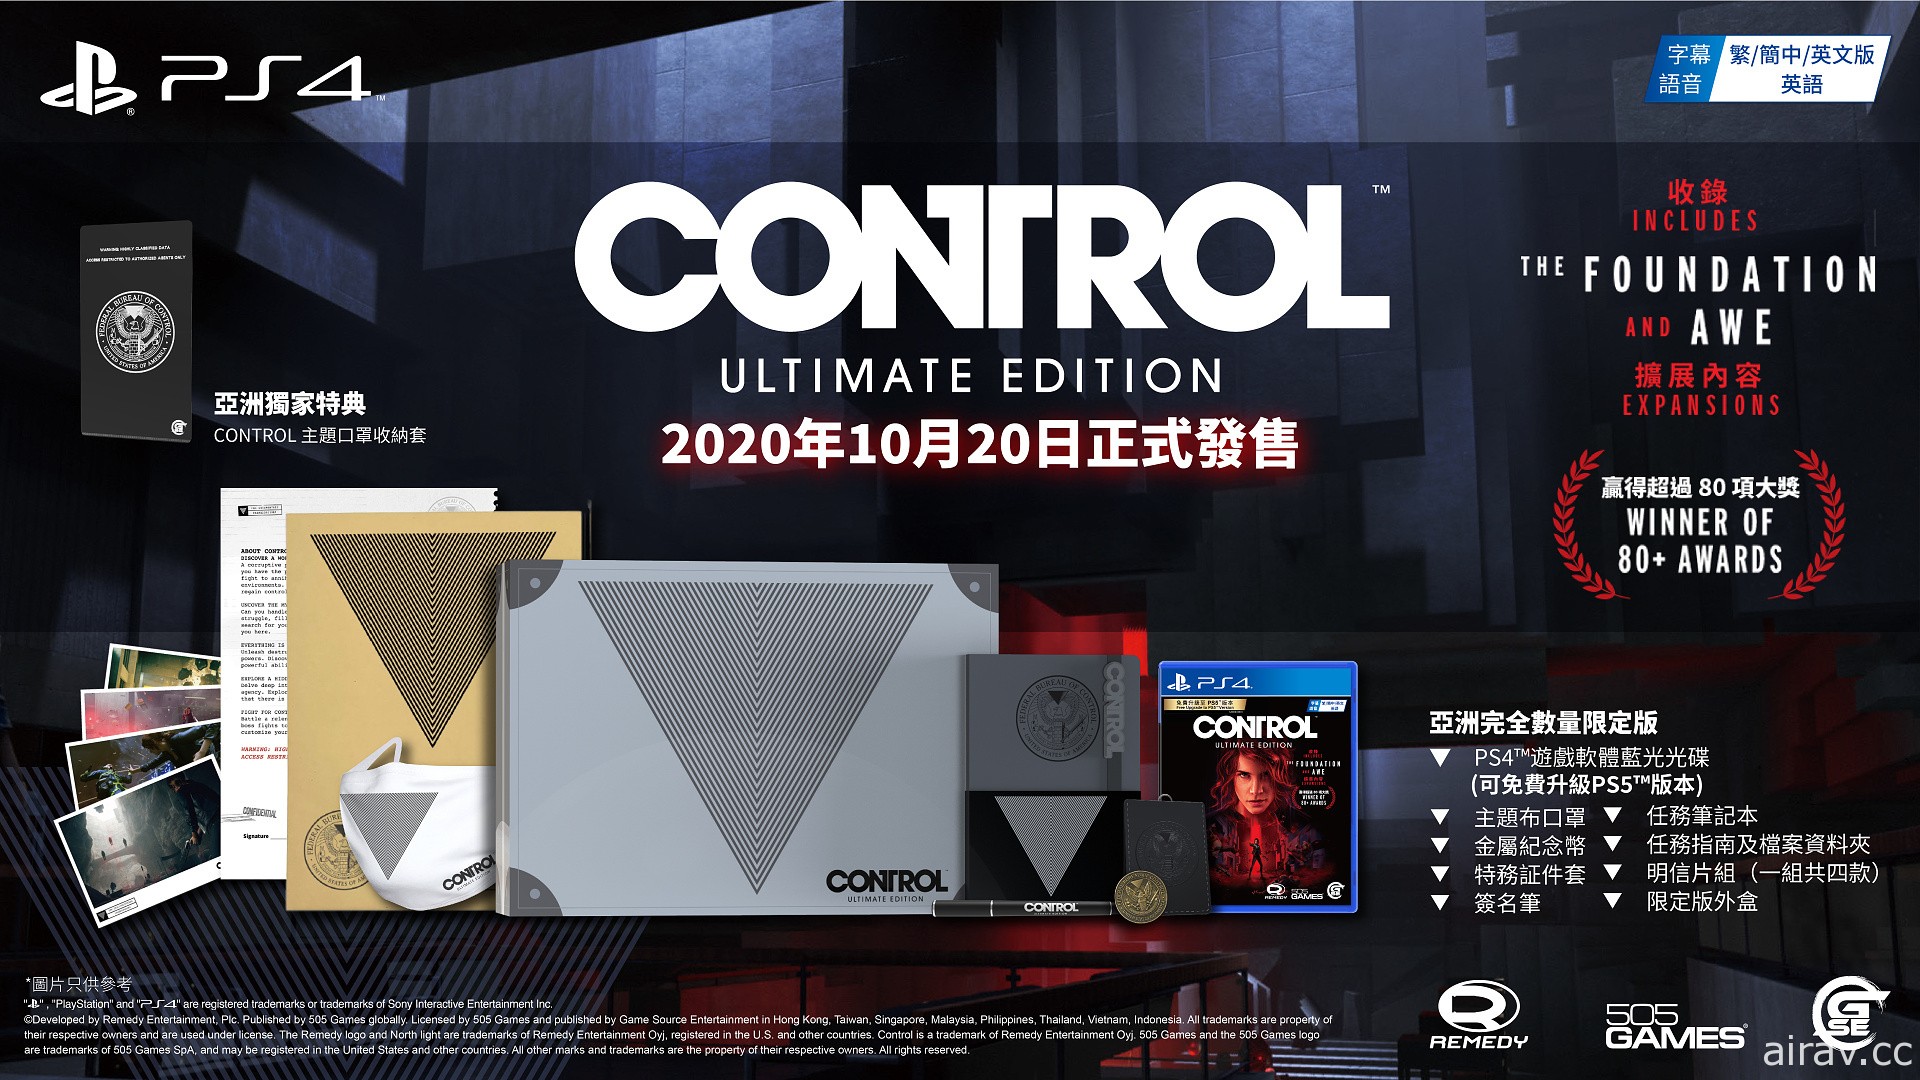 PS4《控制 CONTROL 终极版》盒装版正式上市 亚洲完全数量限定版延期发售